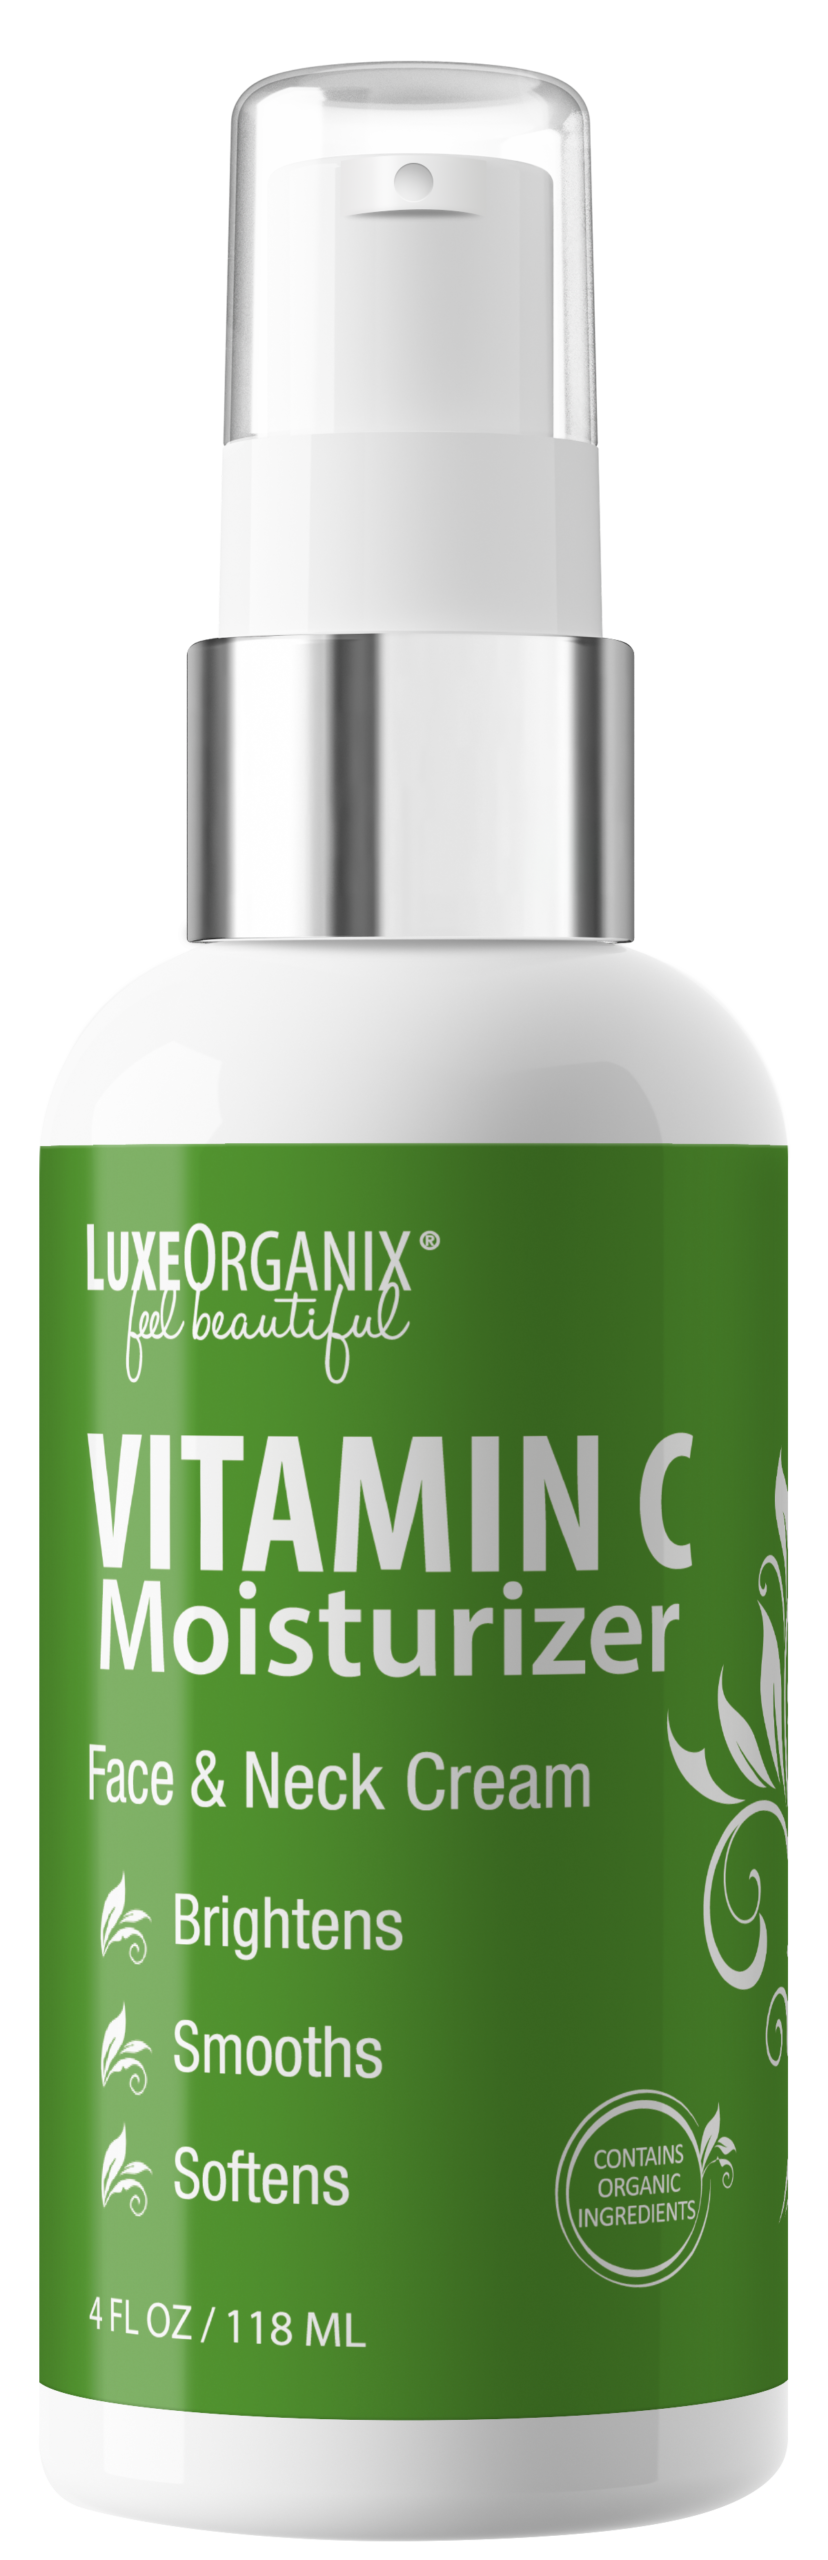 Vitamin C moisturizer for face